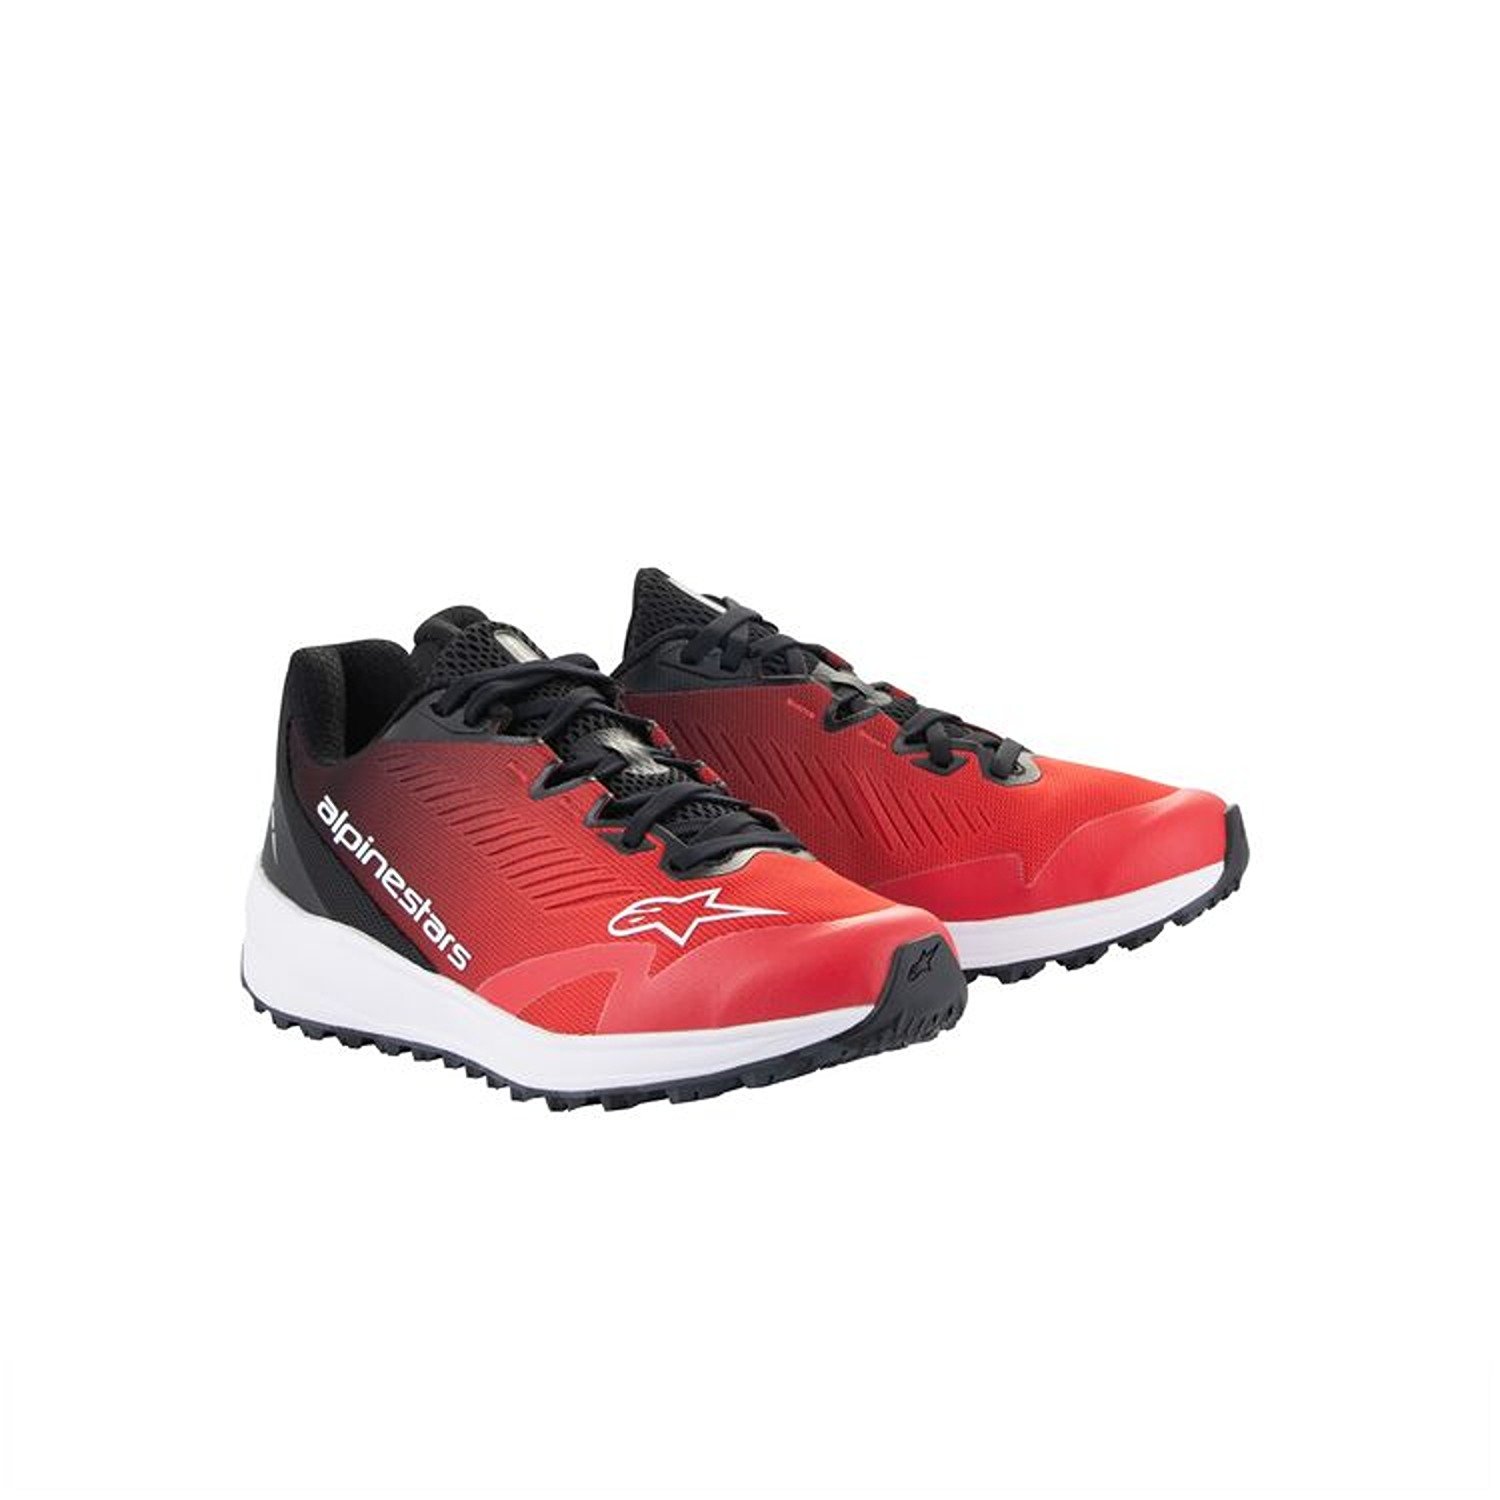 Image of Alpinestars Meta Road V2 Shoes Red Black White Size US 7 EN